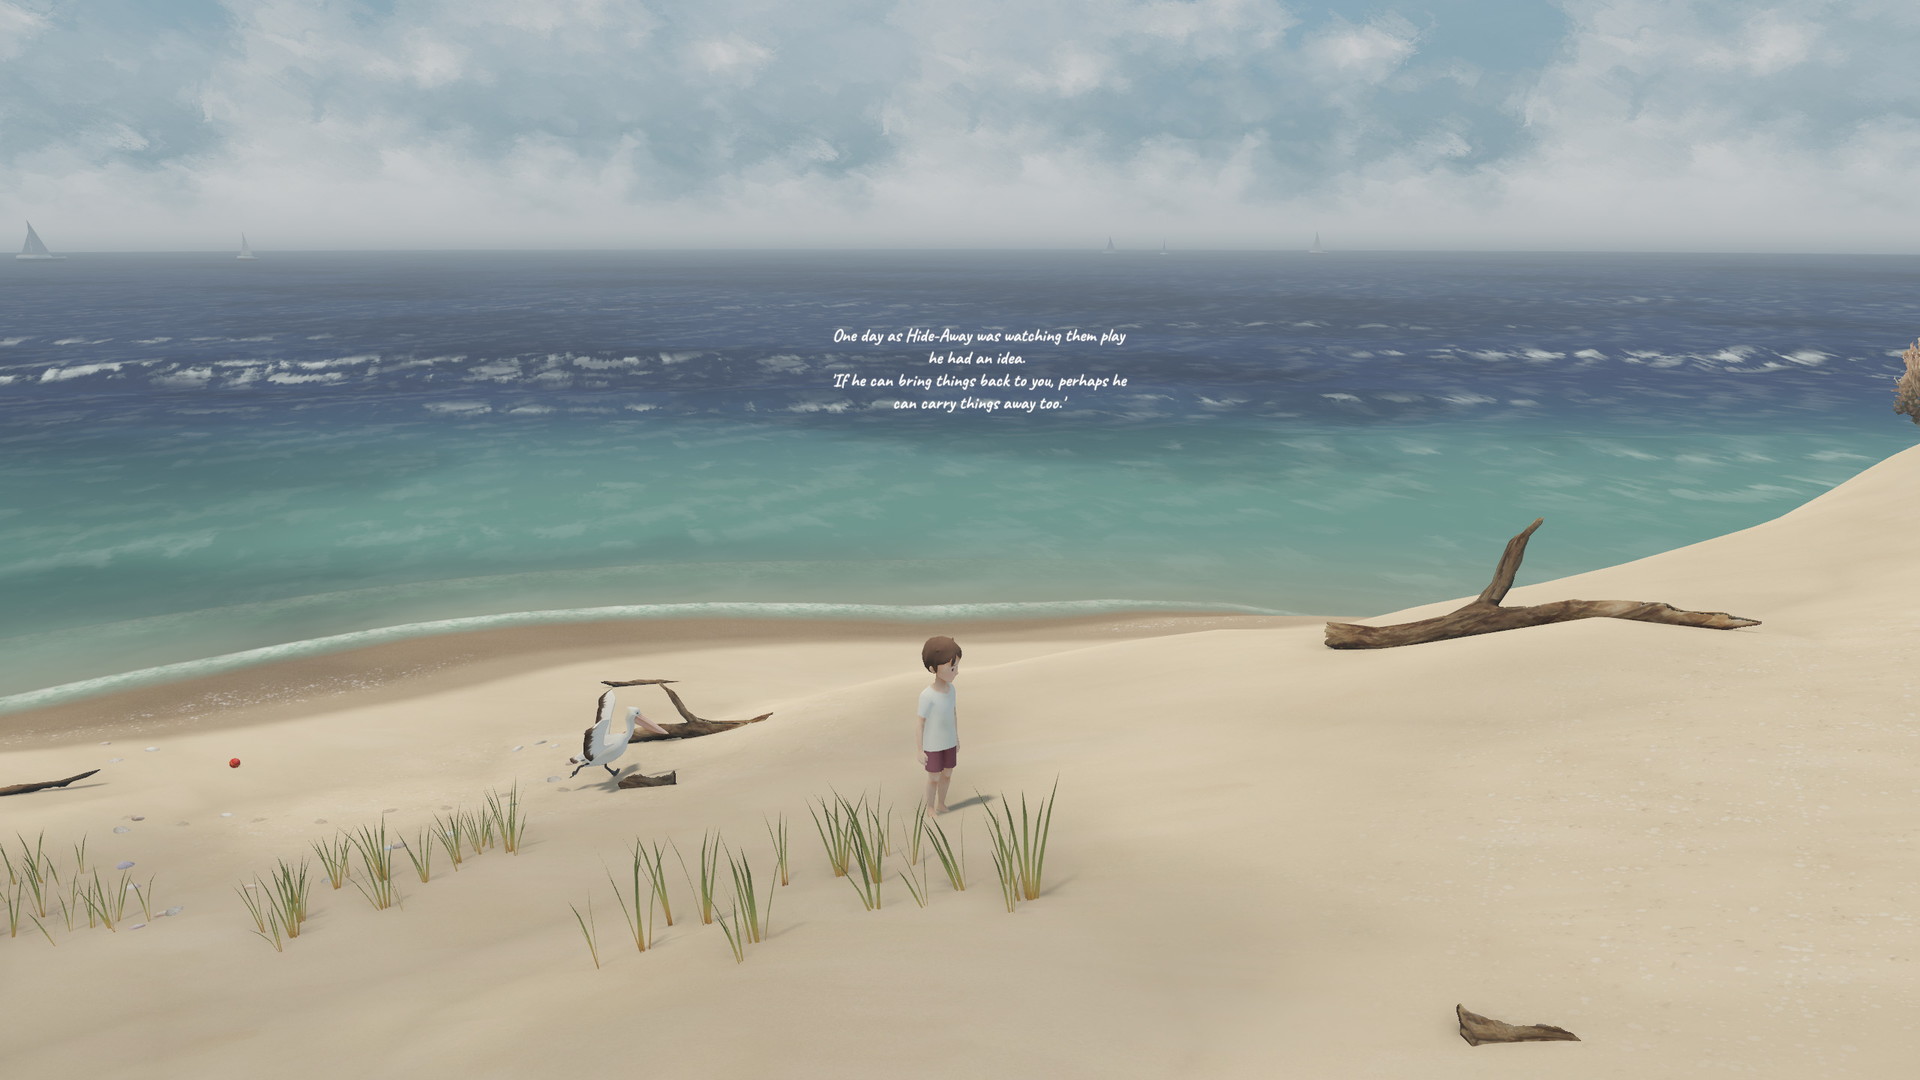 Storm Boy: The Game - screenshot 2